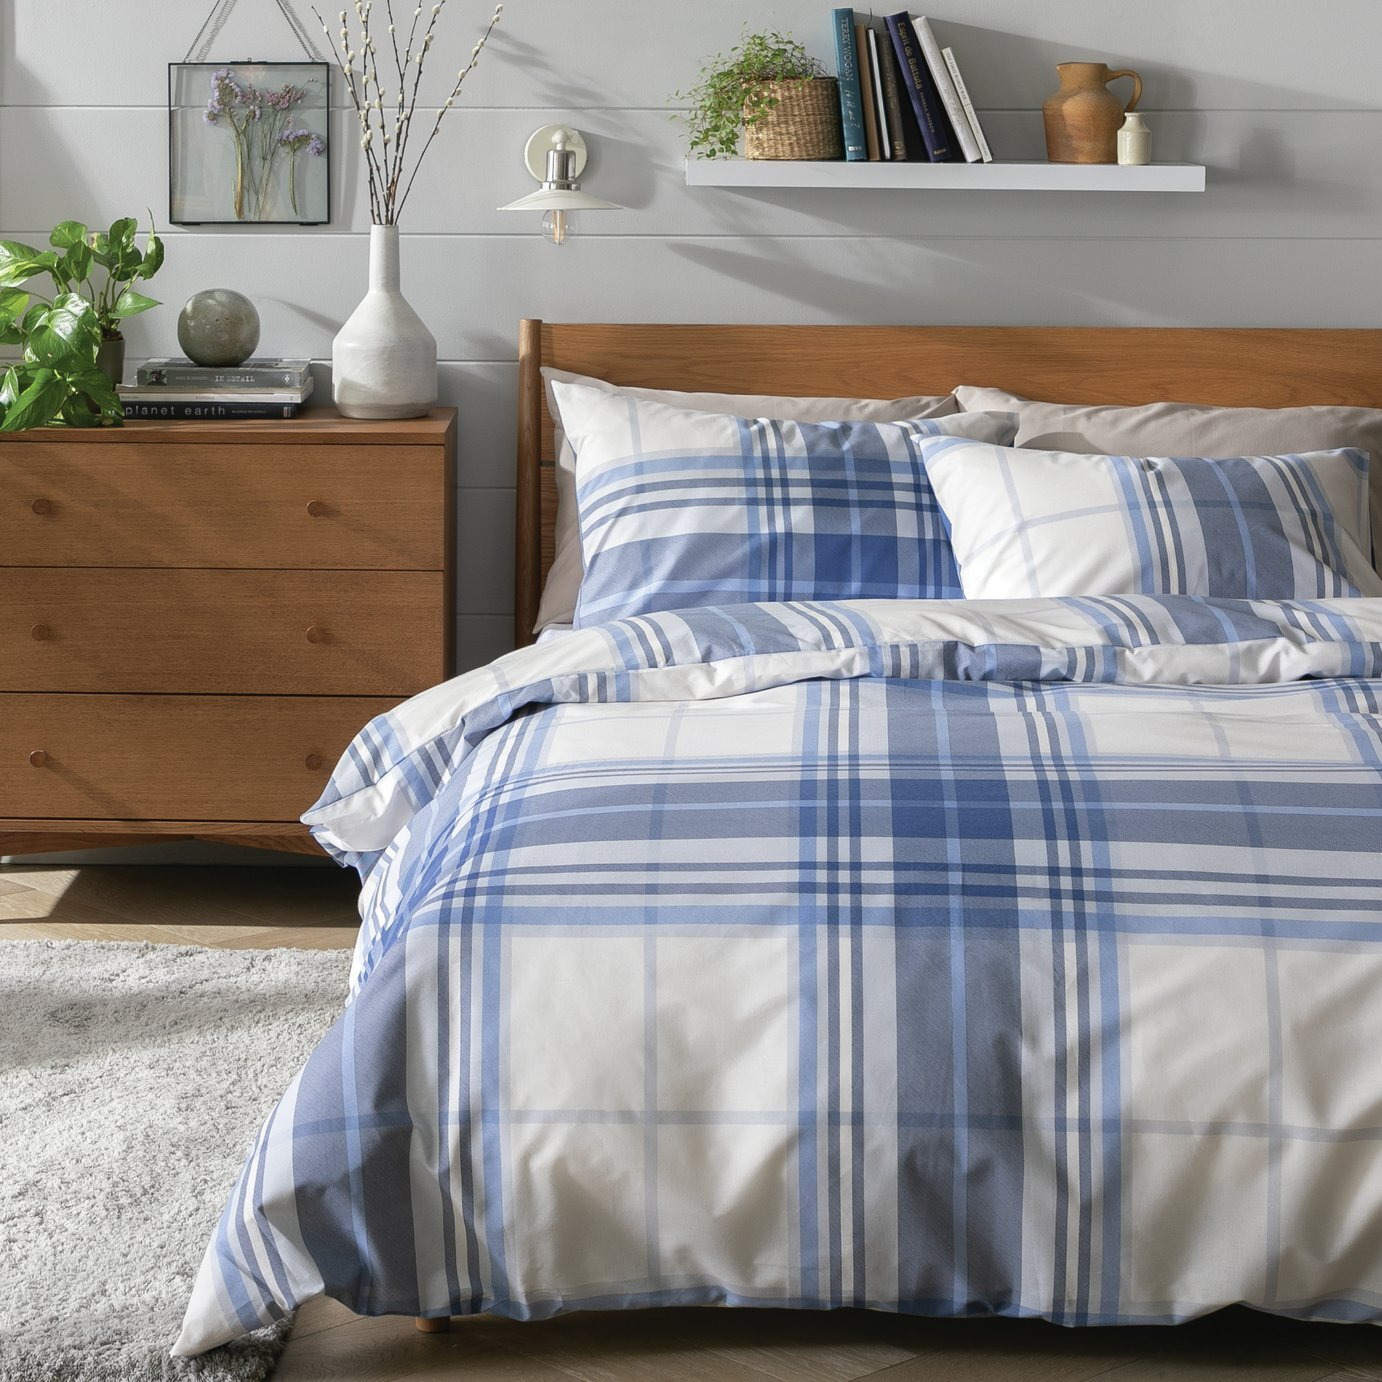 Argos Home Printed Check Blue & White Bedding Set- King size - image 1